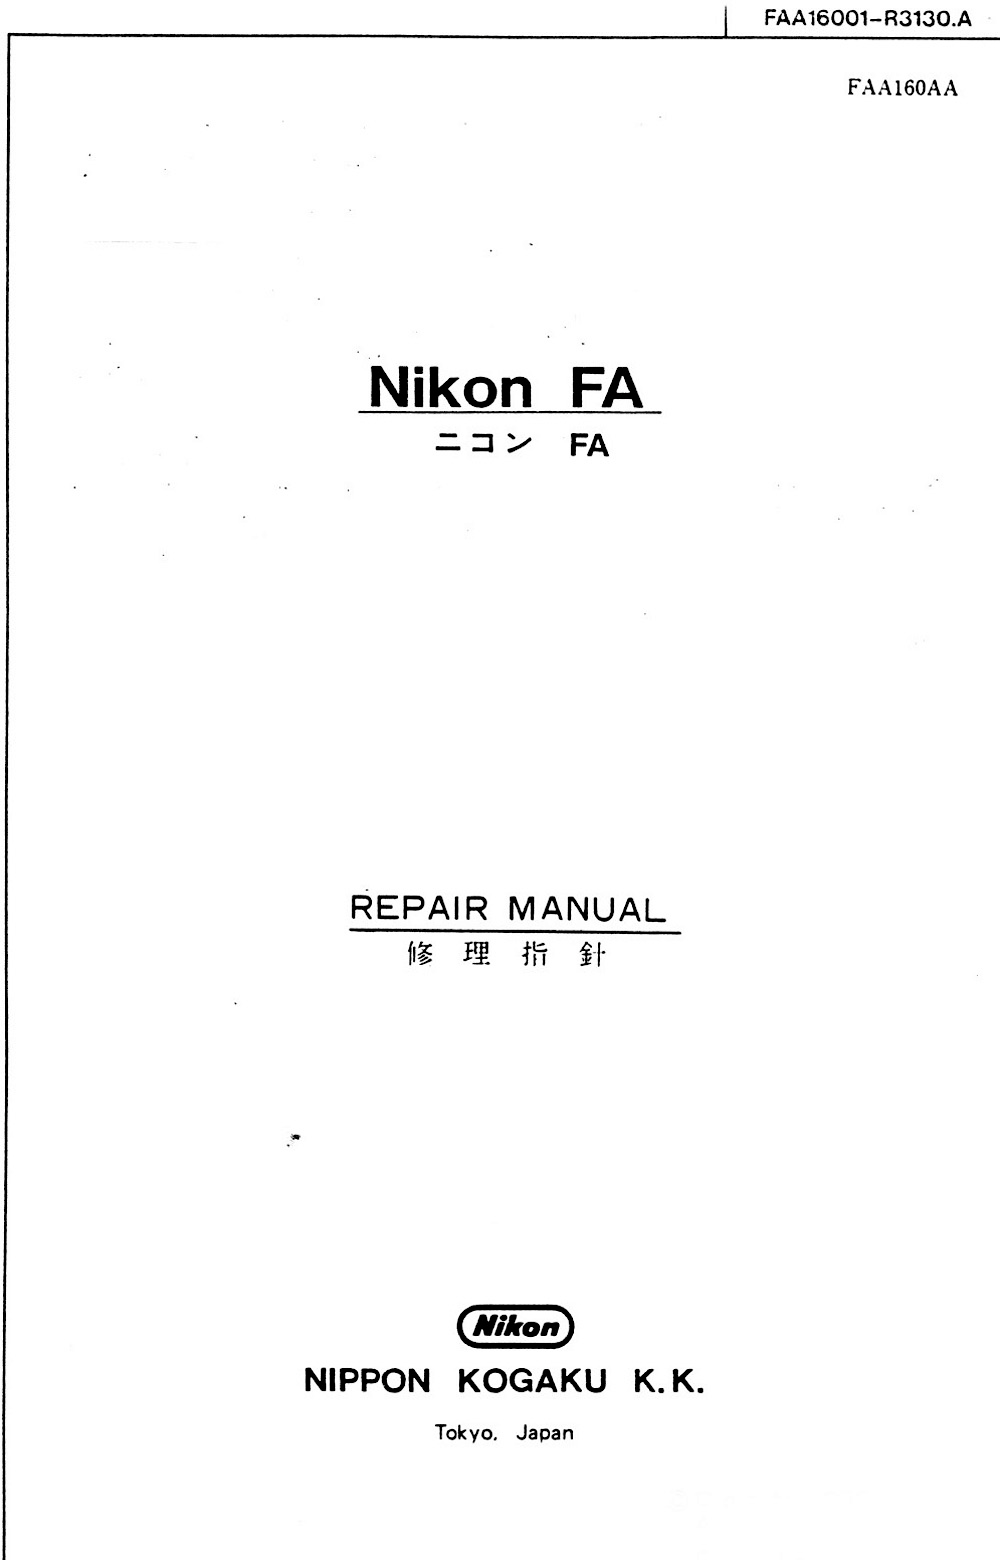 Nikon FA Repair Manual